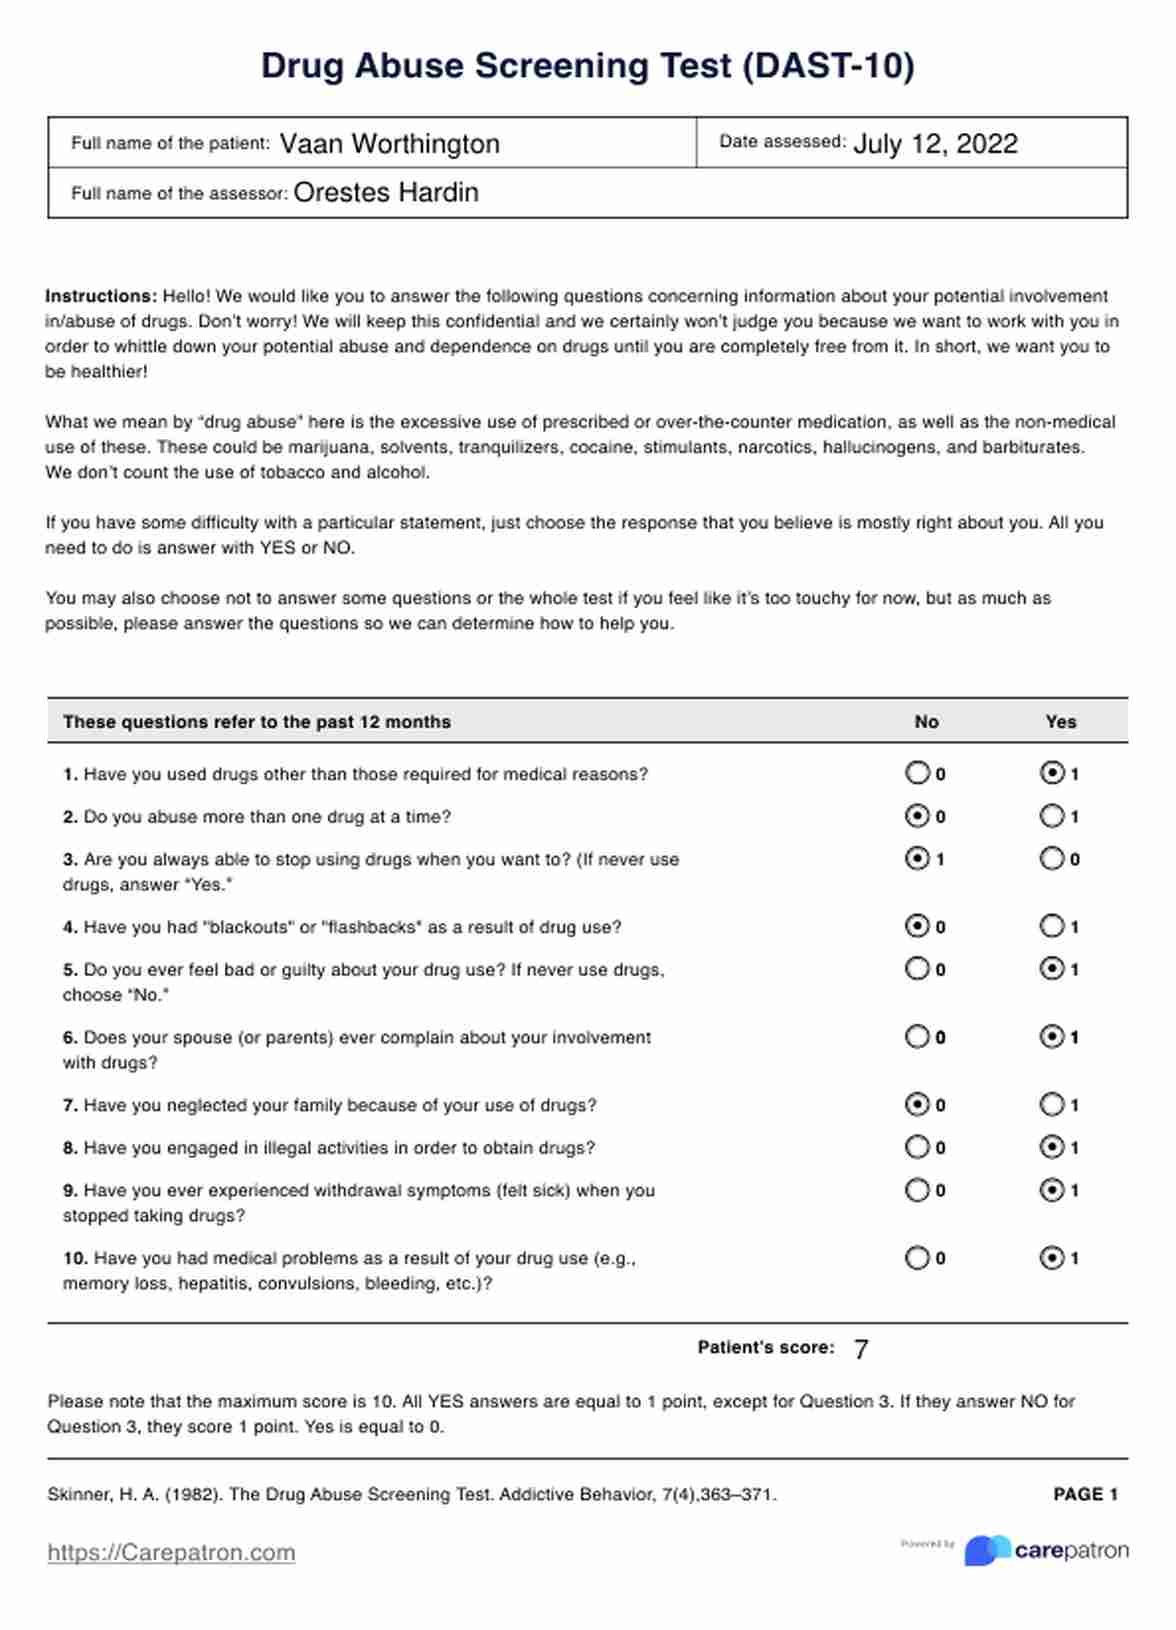 Drug Abuse Screening Test (DAST-10) PDF Example